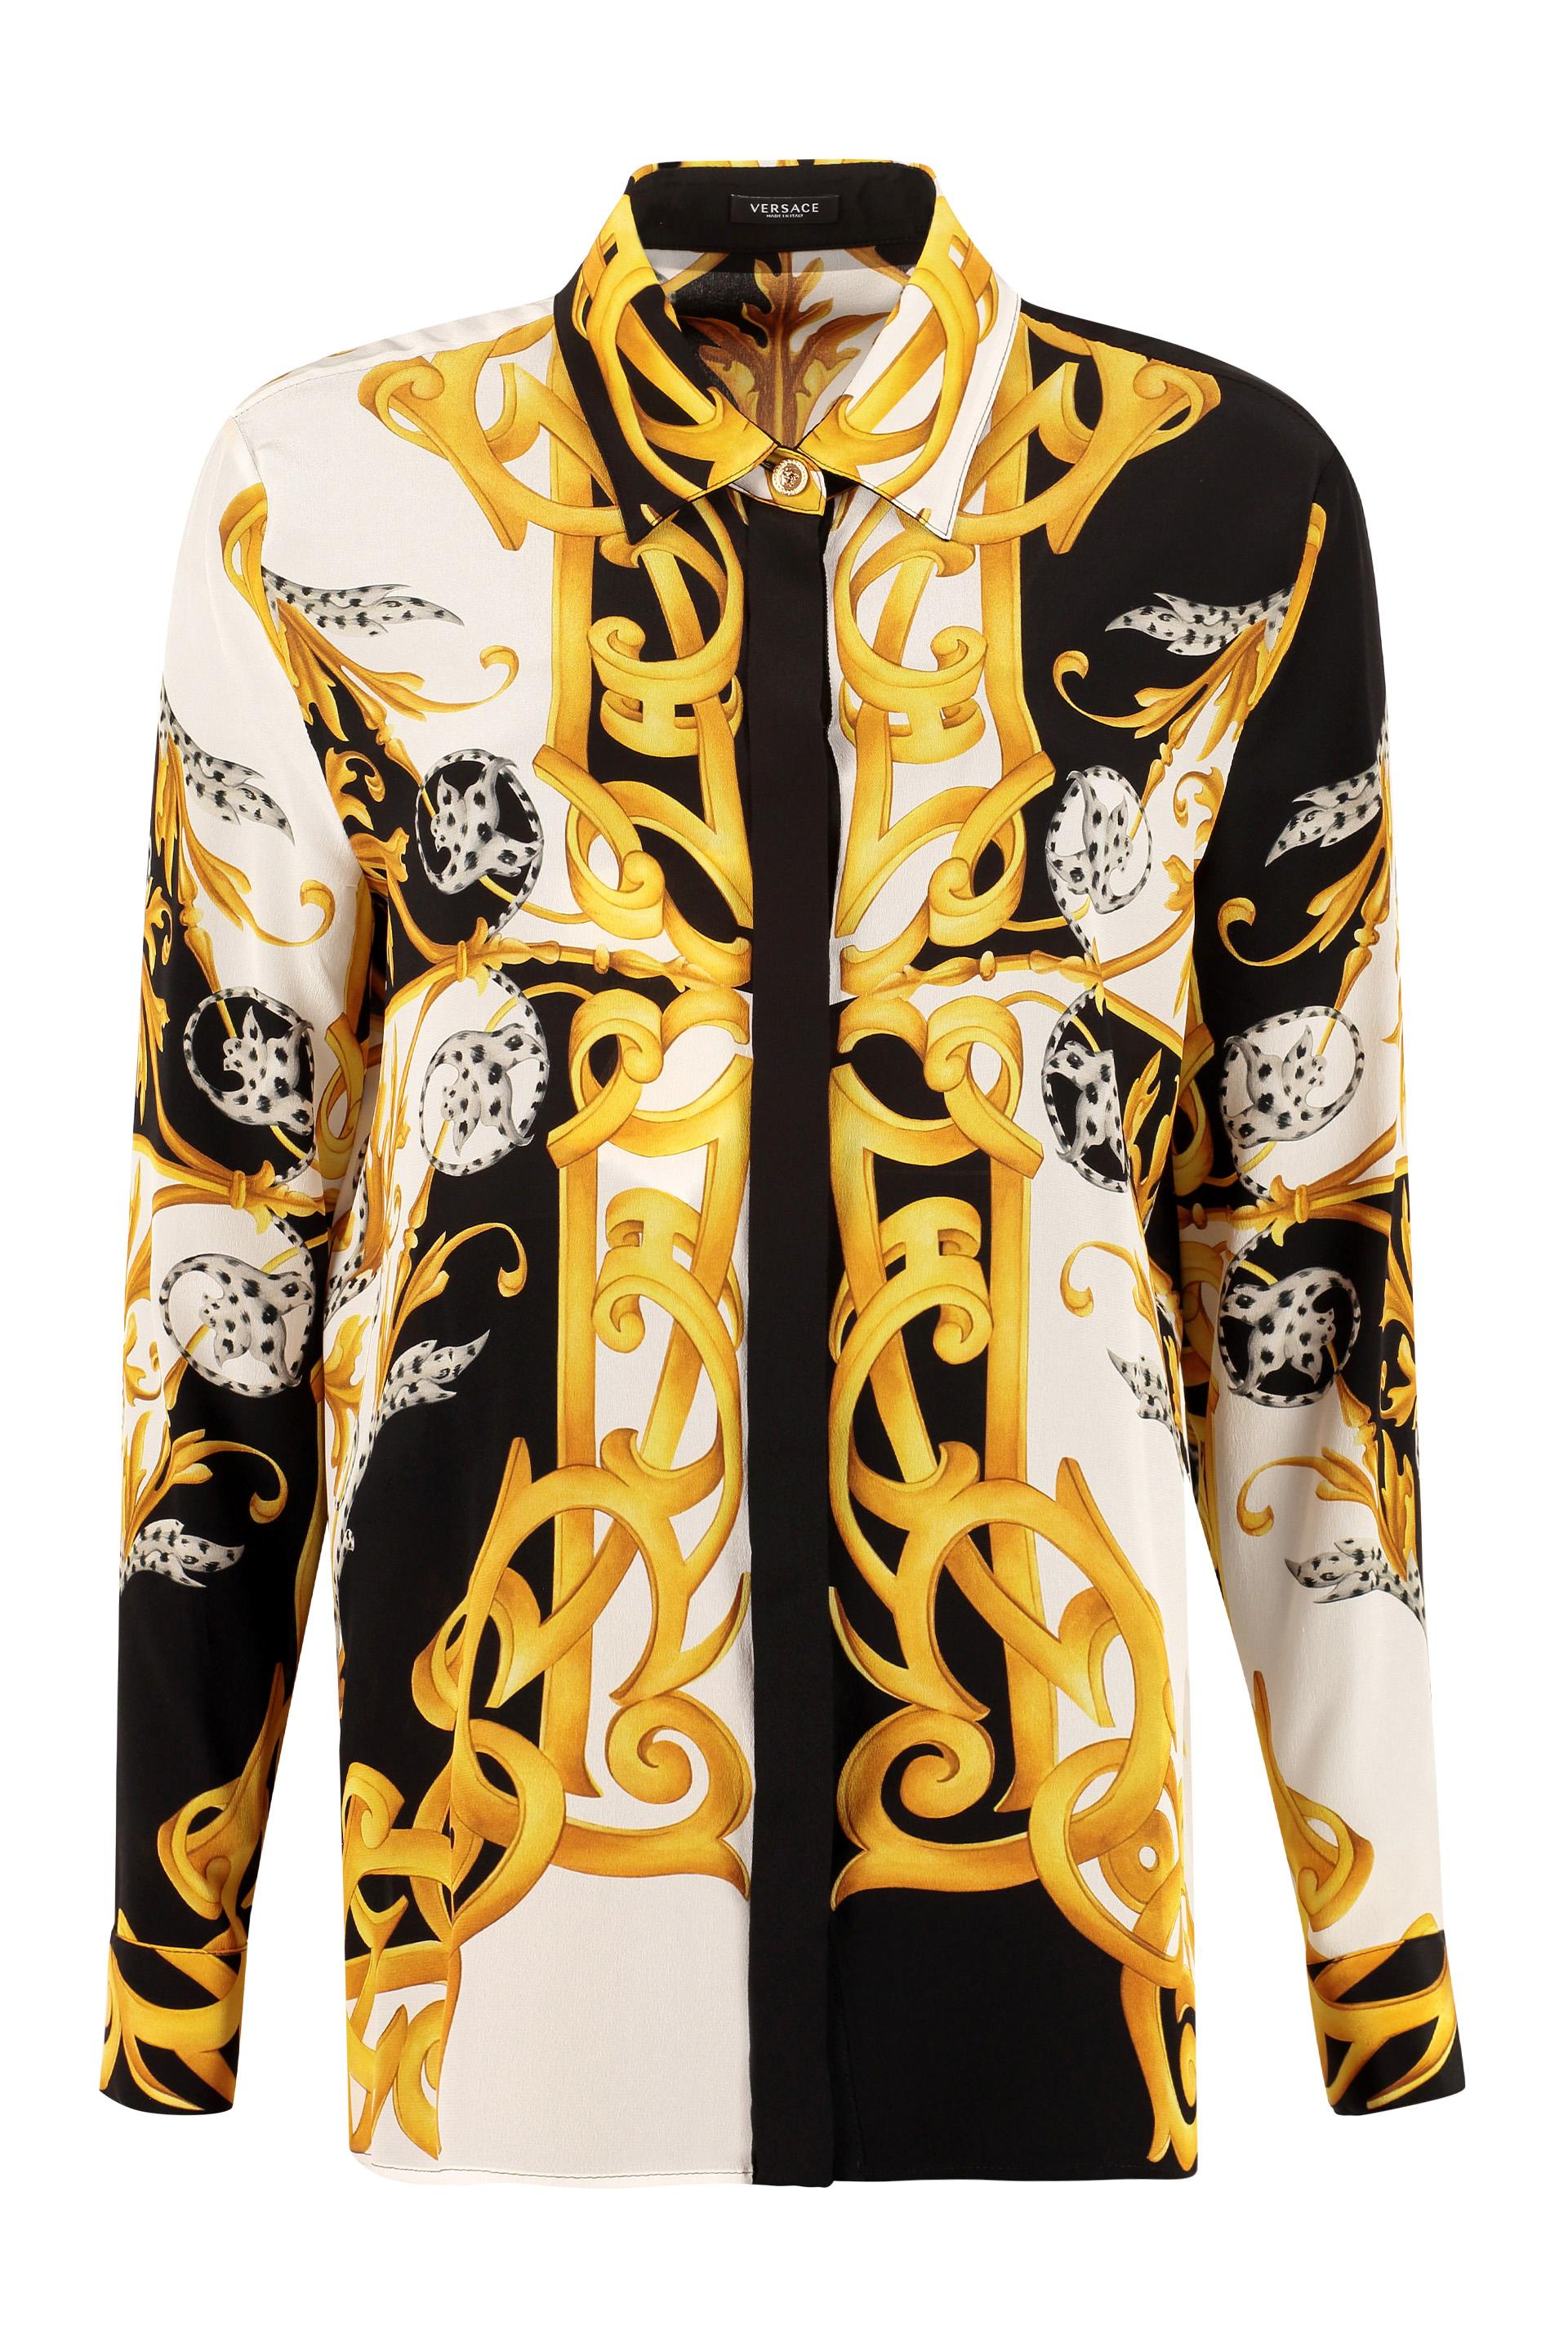 Versace Printed Silk Shirt in Gold (Metallic) - Lyst